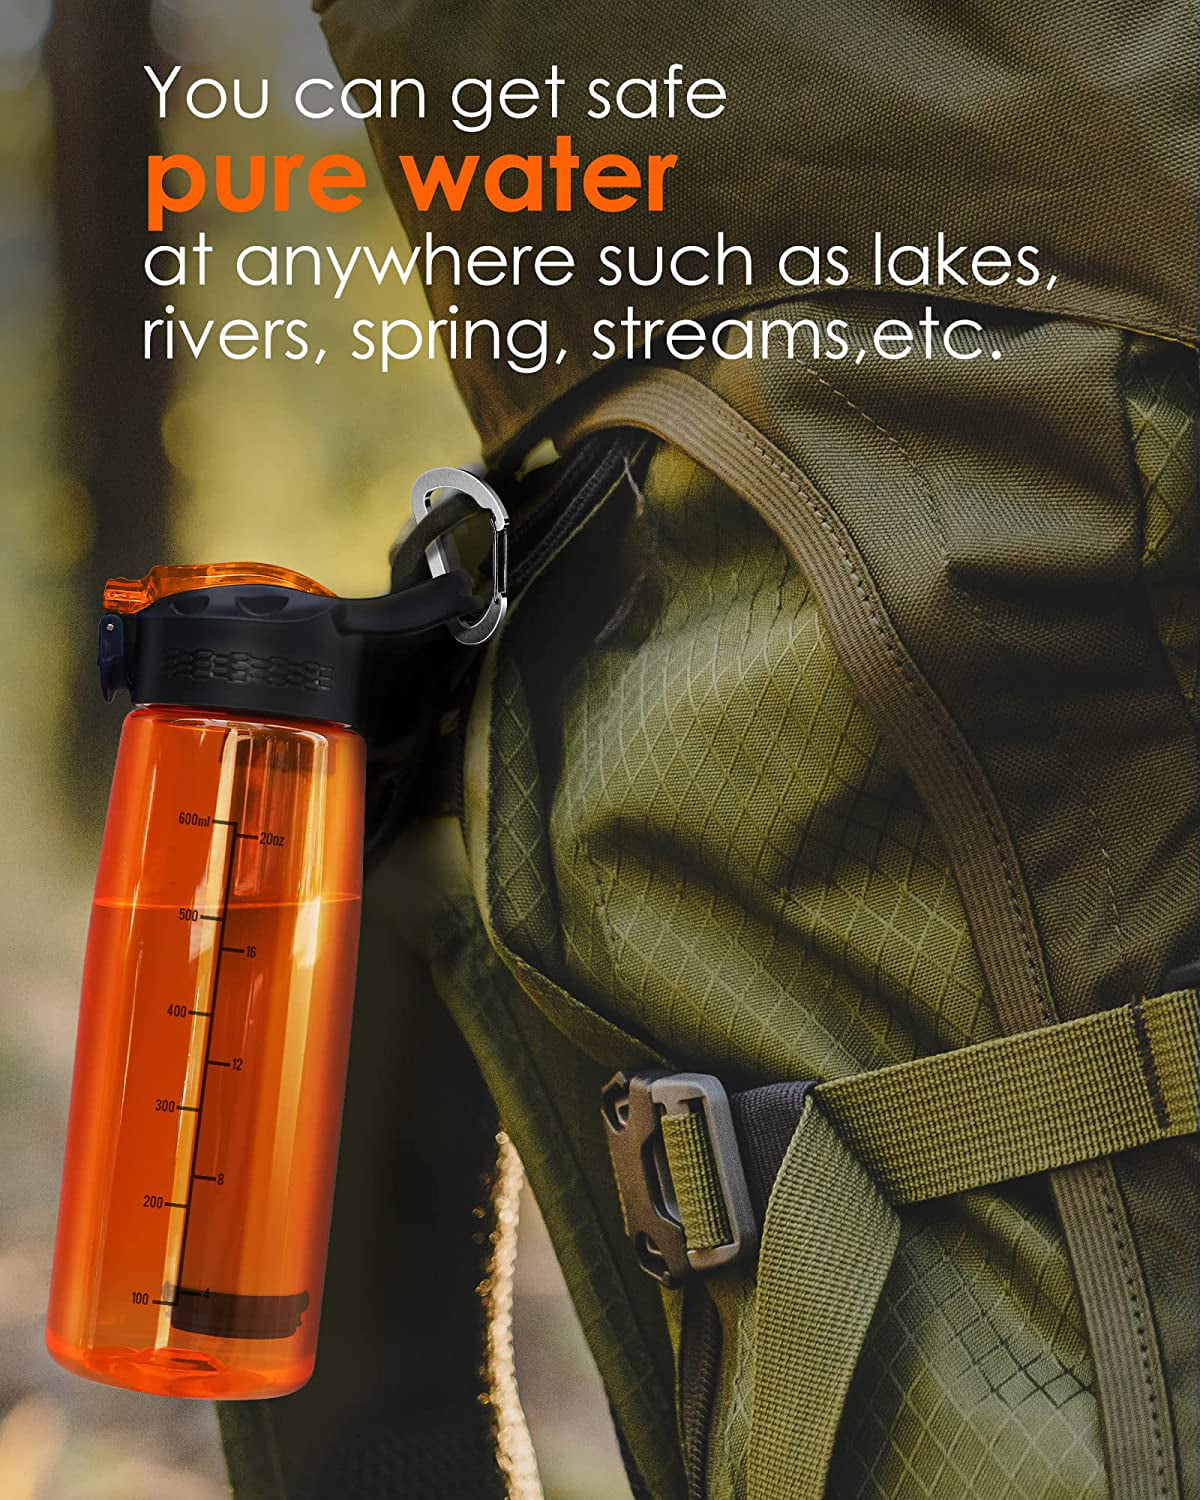 Simpure Water Filter Bottle Orange